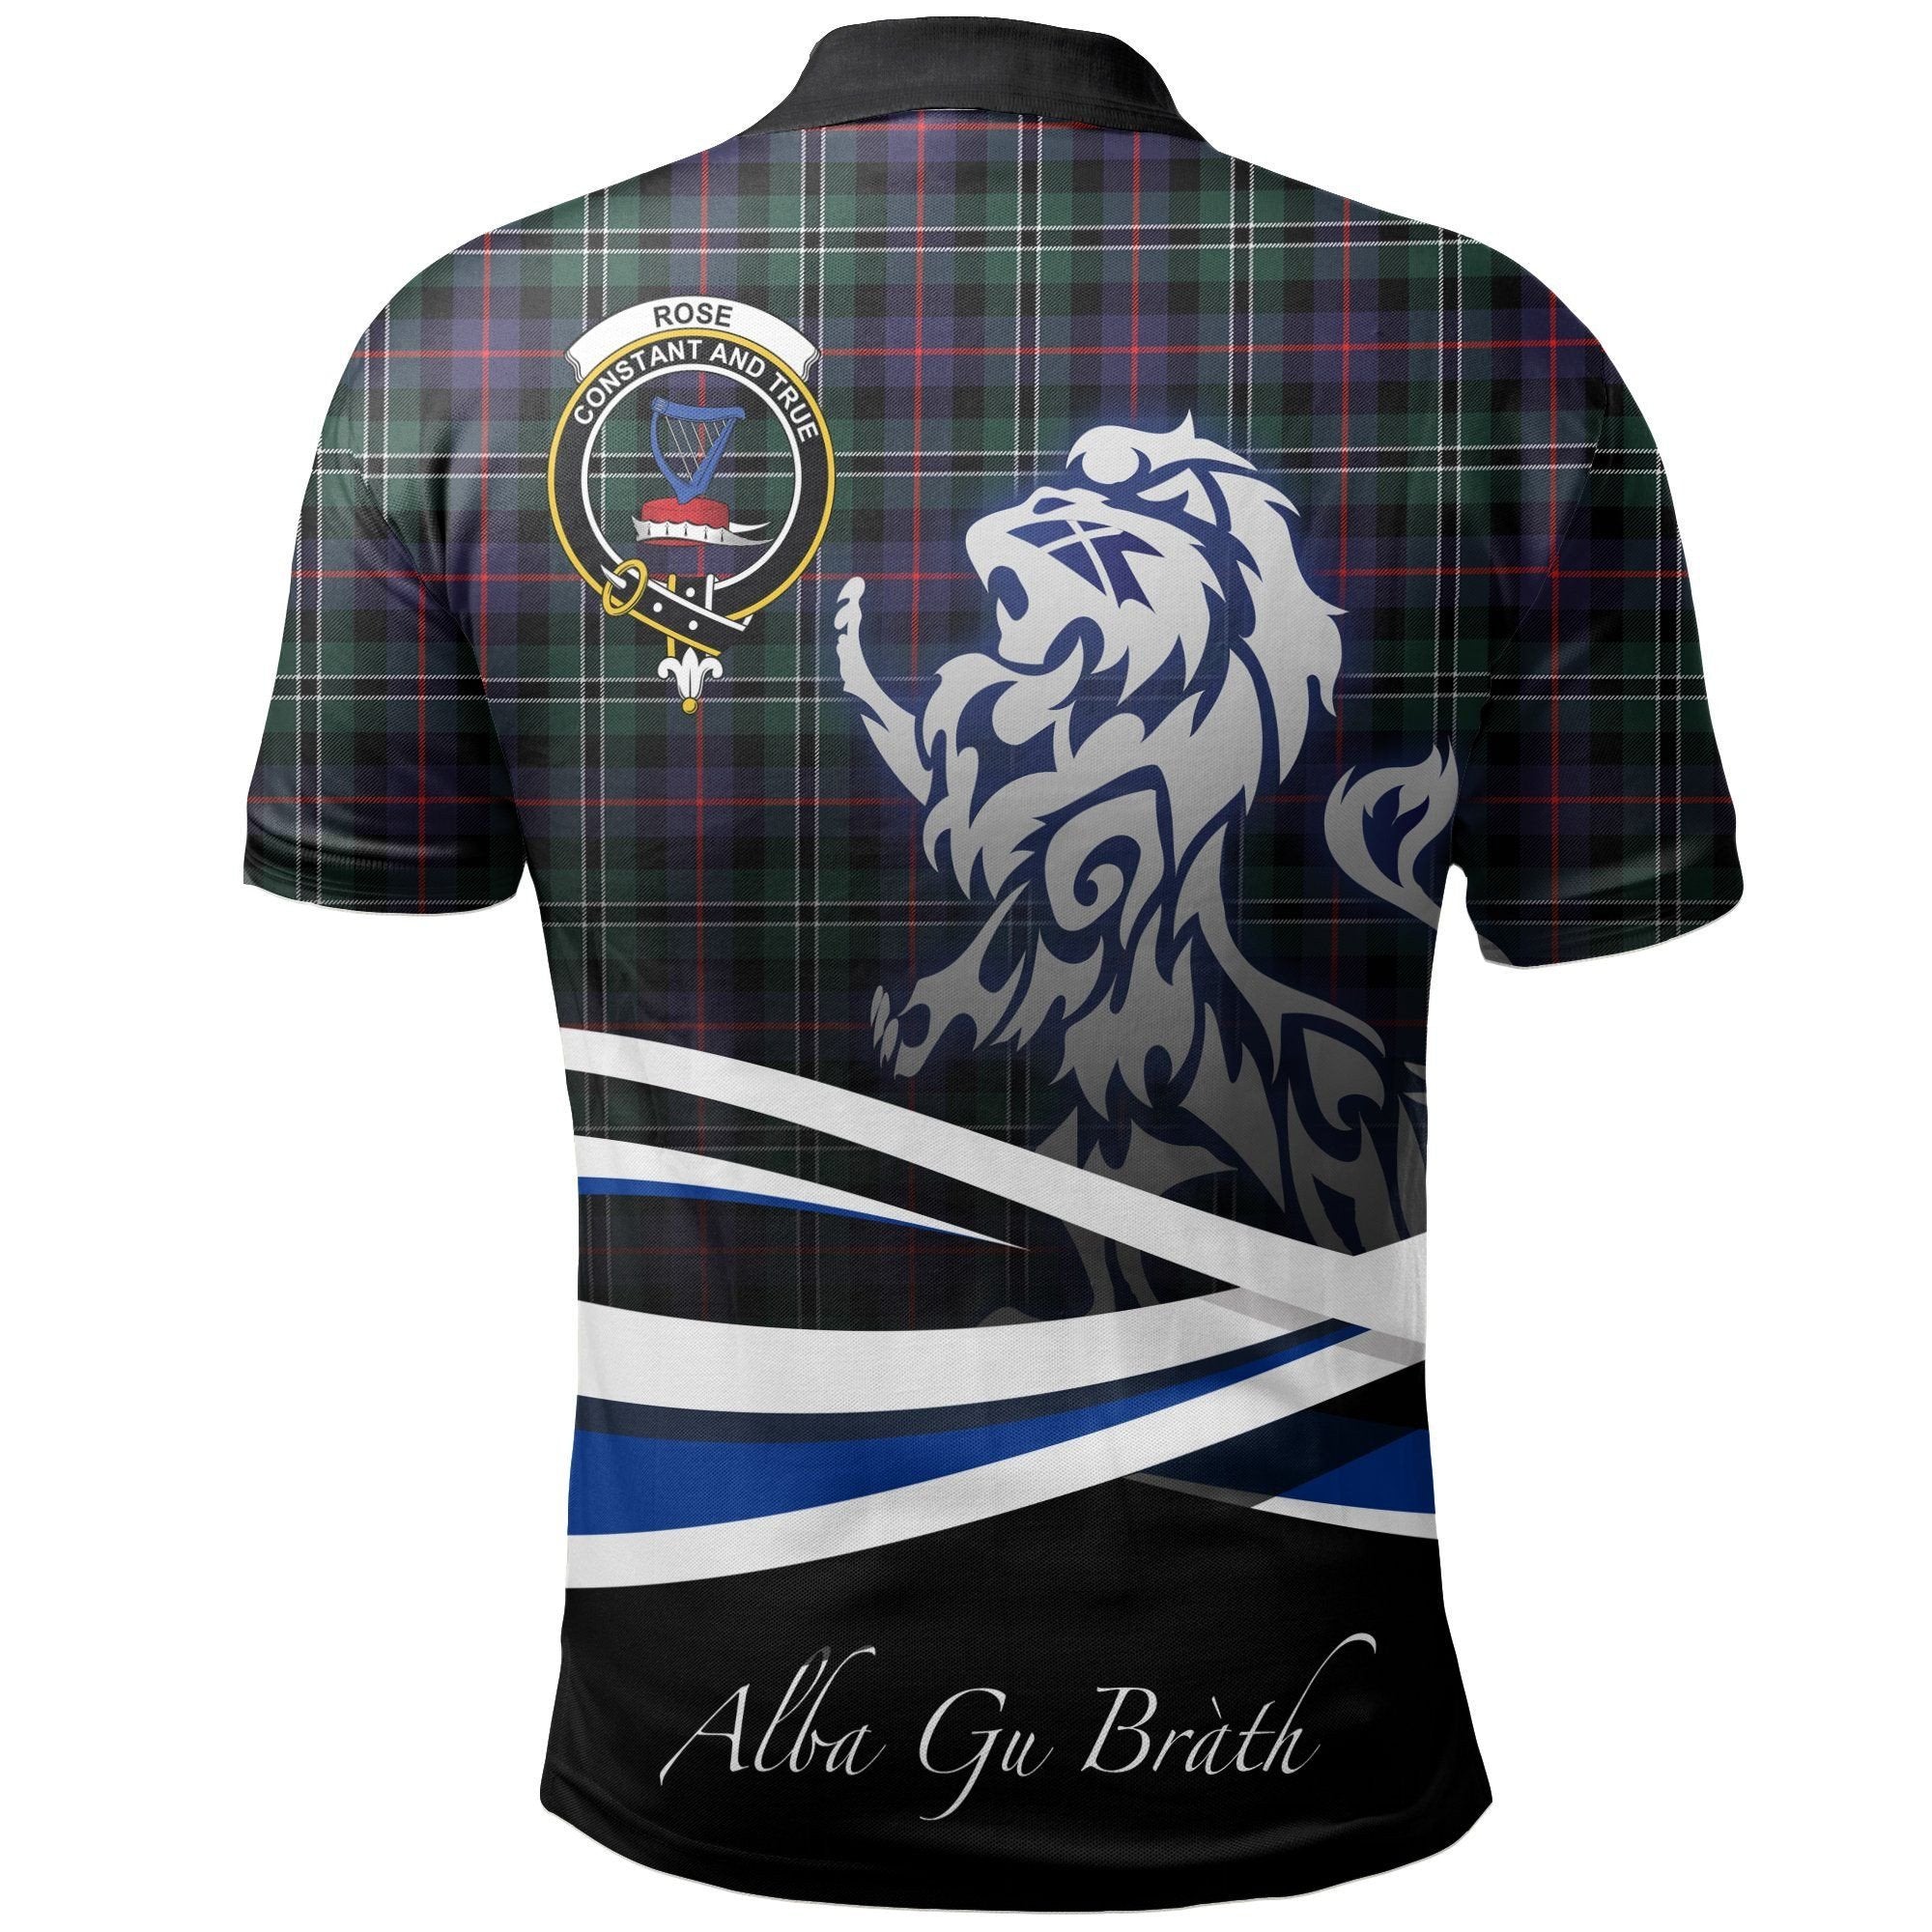 Rose Hunting Modern Clan Polo Shirt, Scottish Tartan Rose Hunting Modern Clans Polo Shirt Crest Lion Style